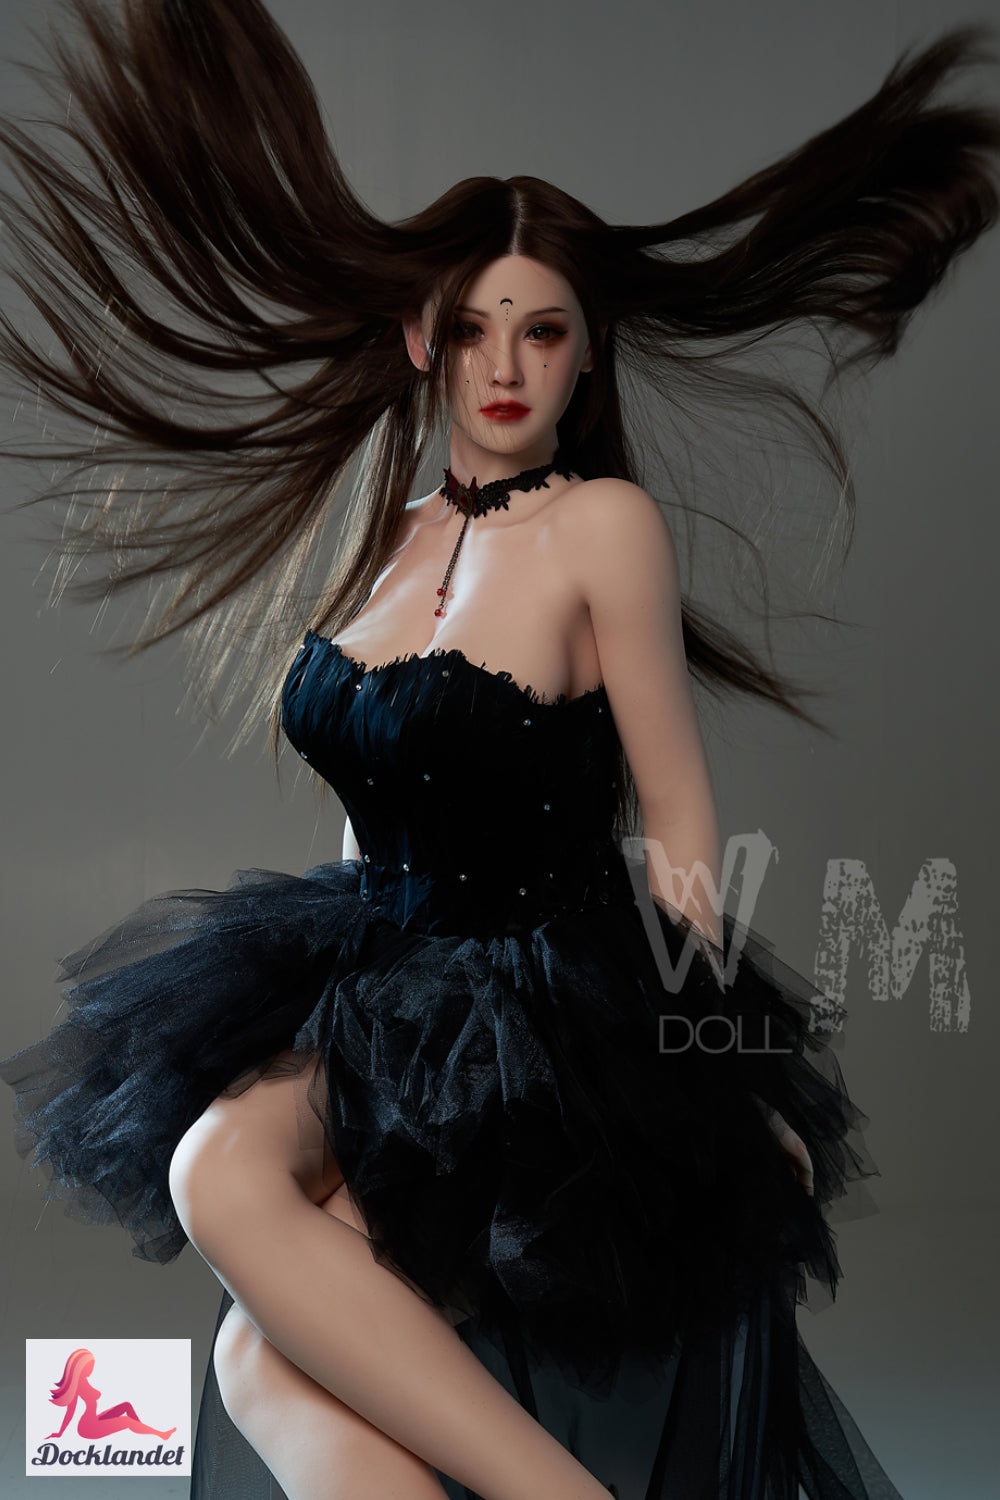 Samara Sex Doll (WM-Doll 164cm D-cup Silicone #20)